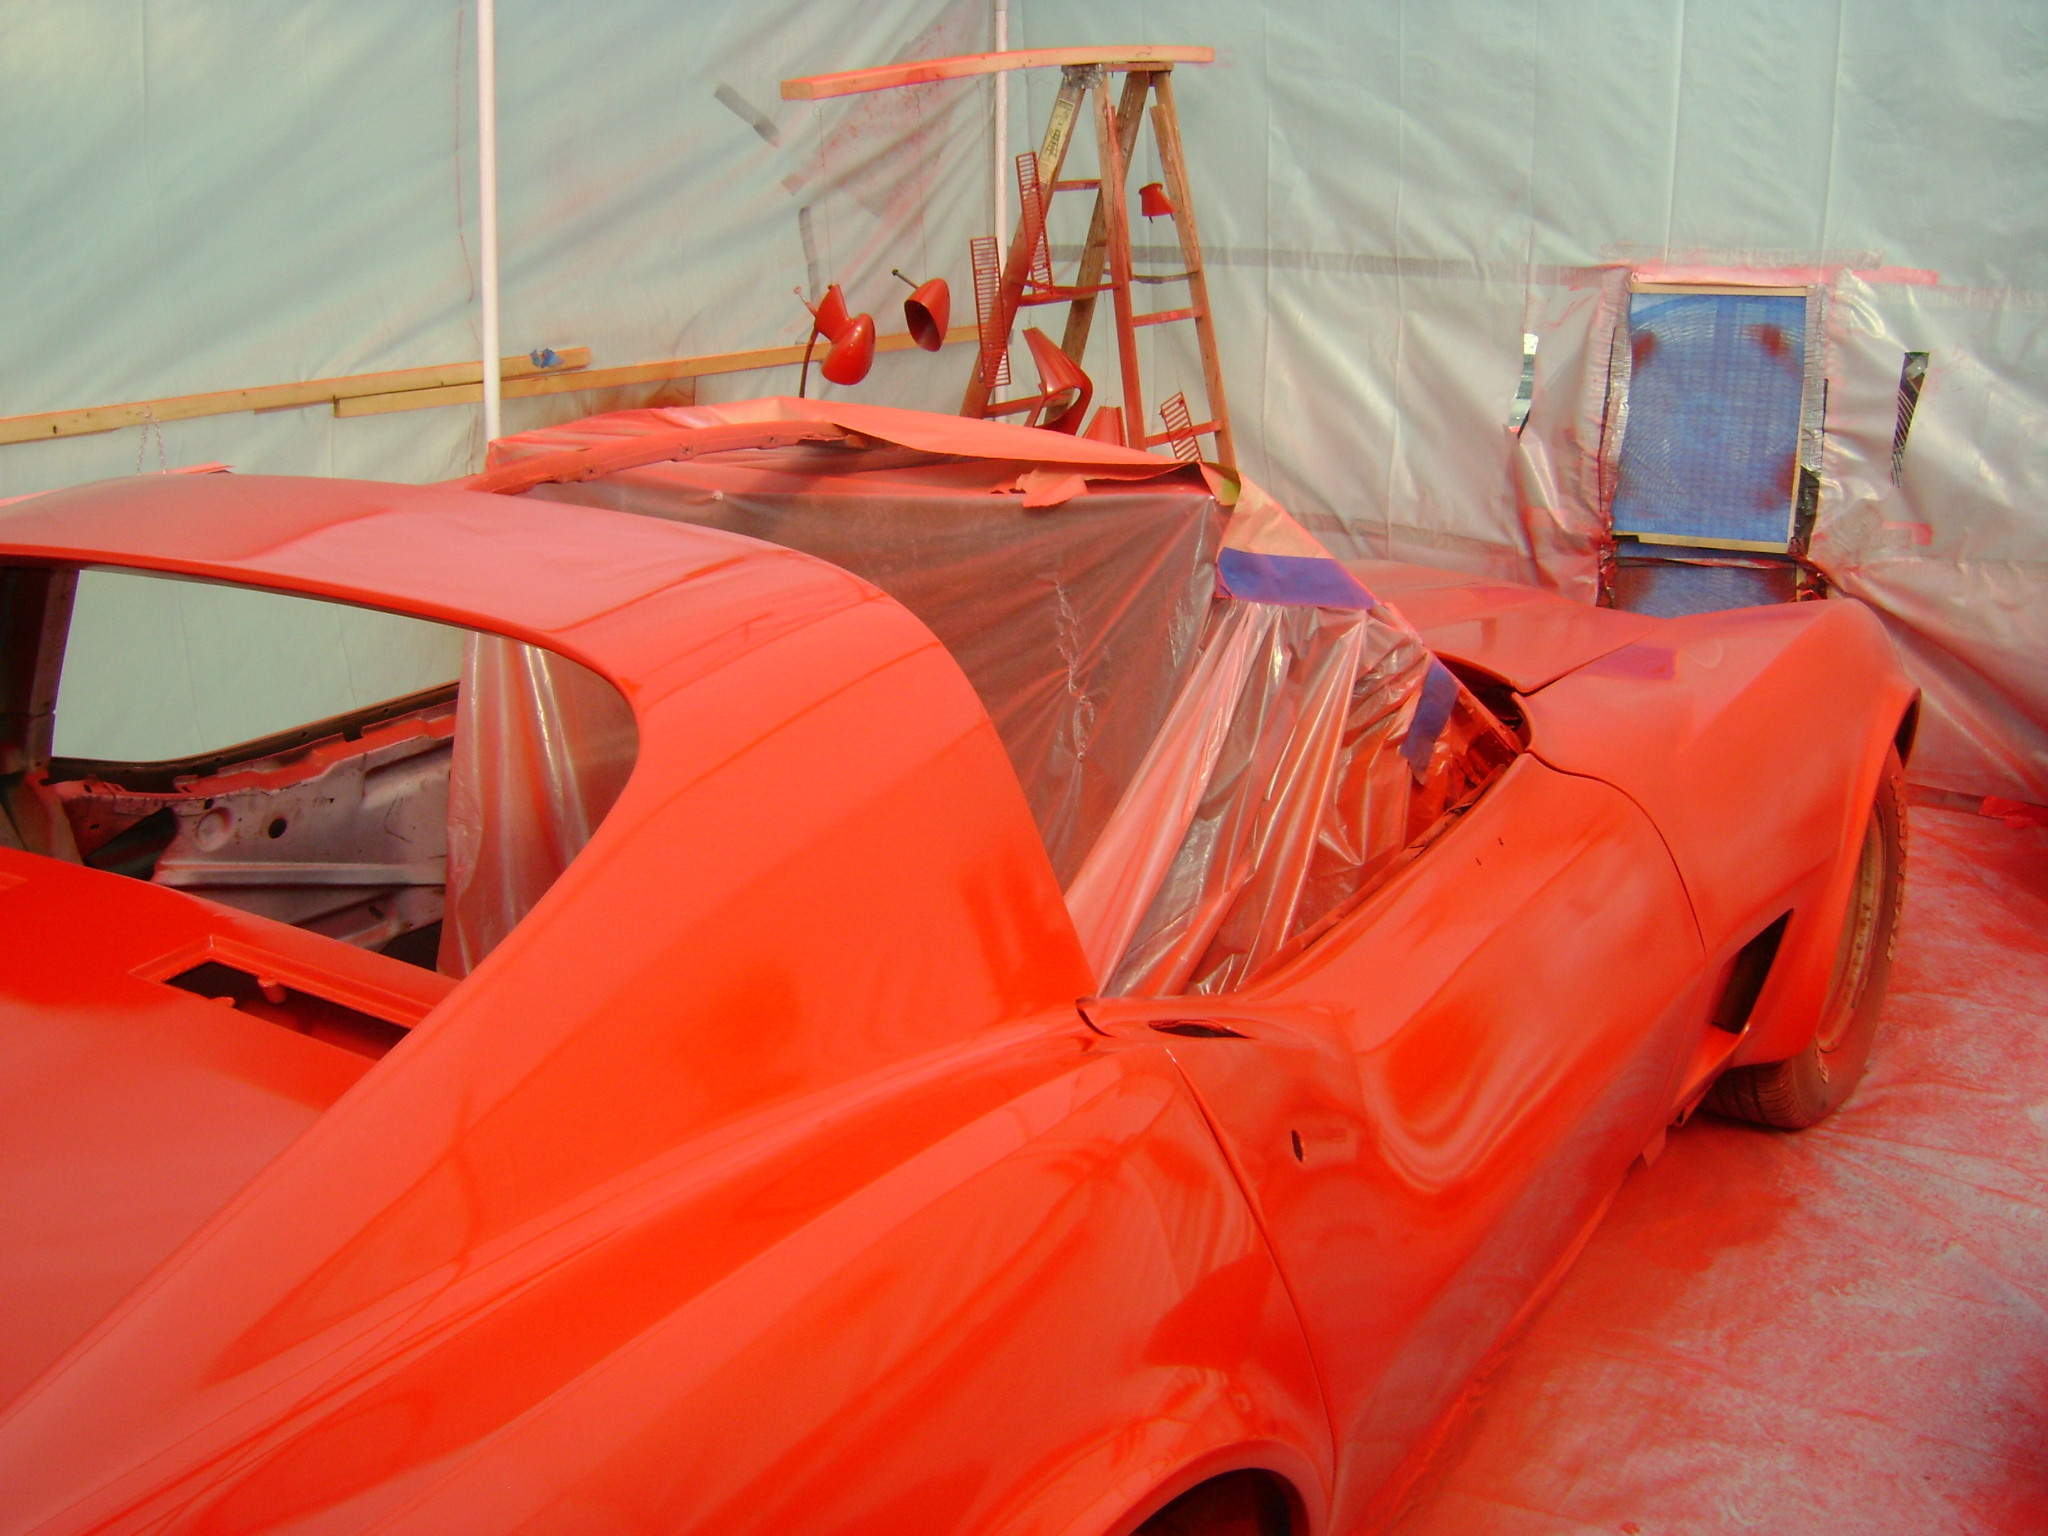 Best ideas about DIY Car Paint Booth
. Save or Pin My DIY paint booth CorvetteForum Chevrolet Corvette Now.